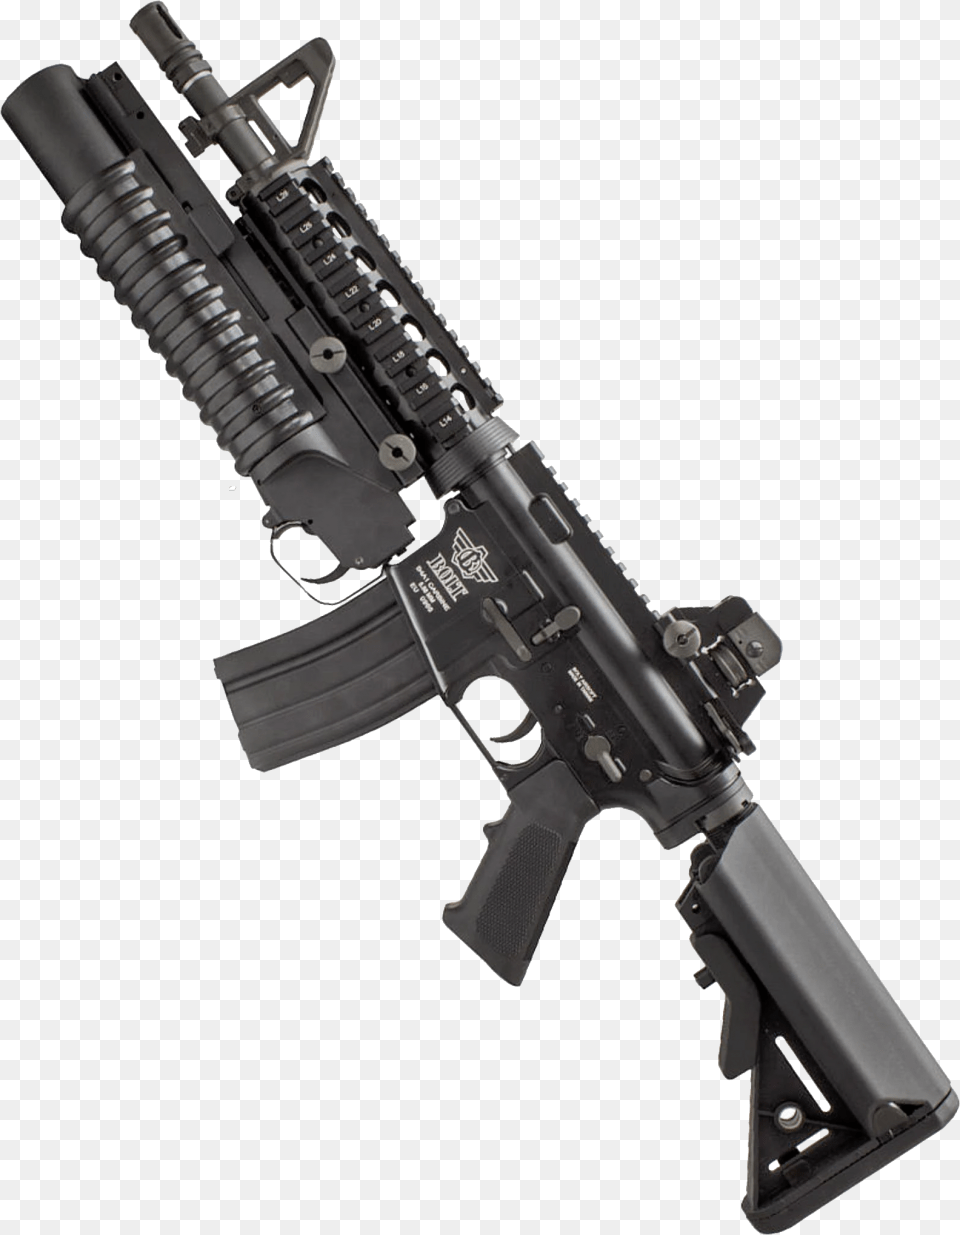 Grenade Launcher Image, Firearm, Gun, Rifle, Weapon Free Png Download